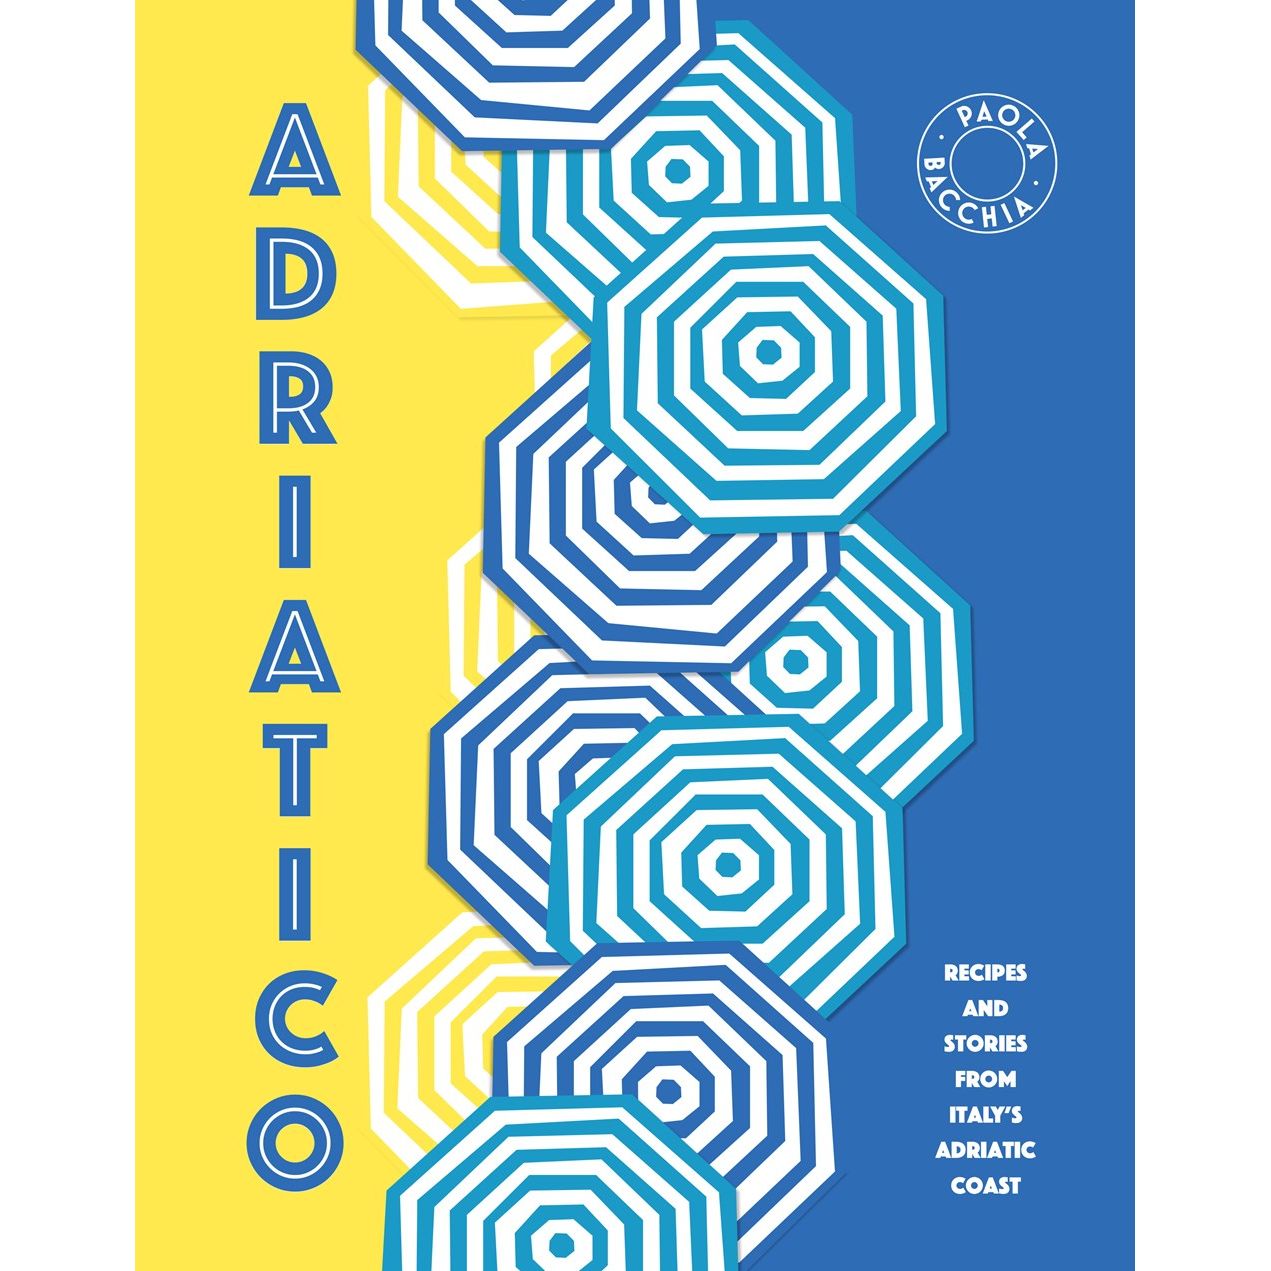 Adriatico: Recipes and Stories from Italy's Adriatic Coast (Paola Bacchia)